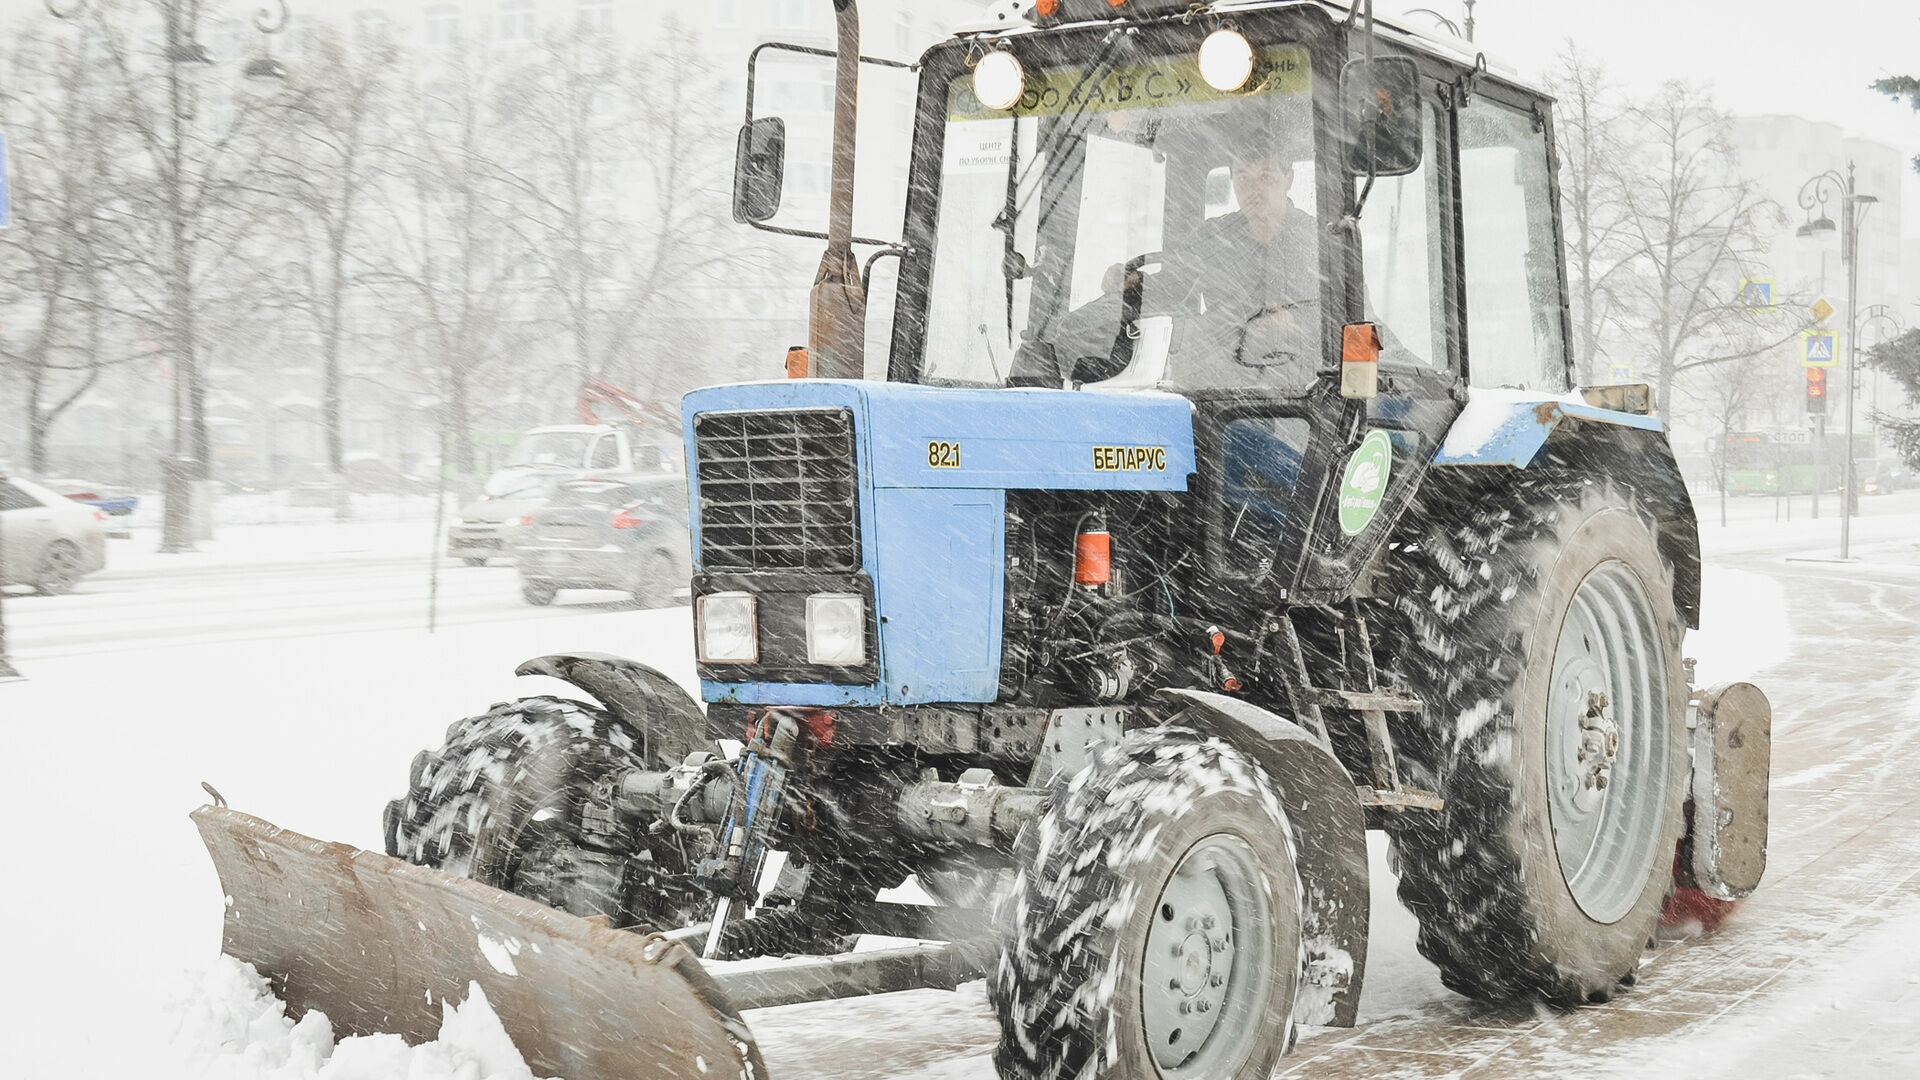 Глава Башкирии похвалил мэра Уфы за уборку снега в городе